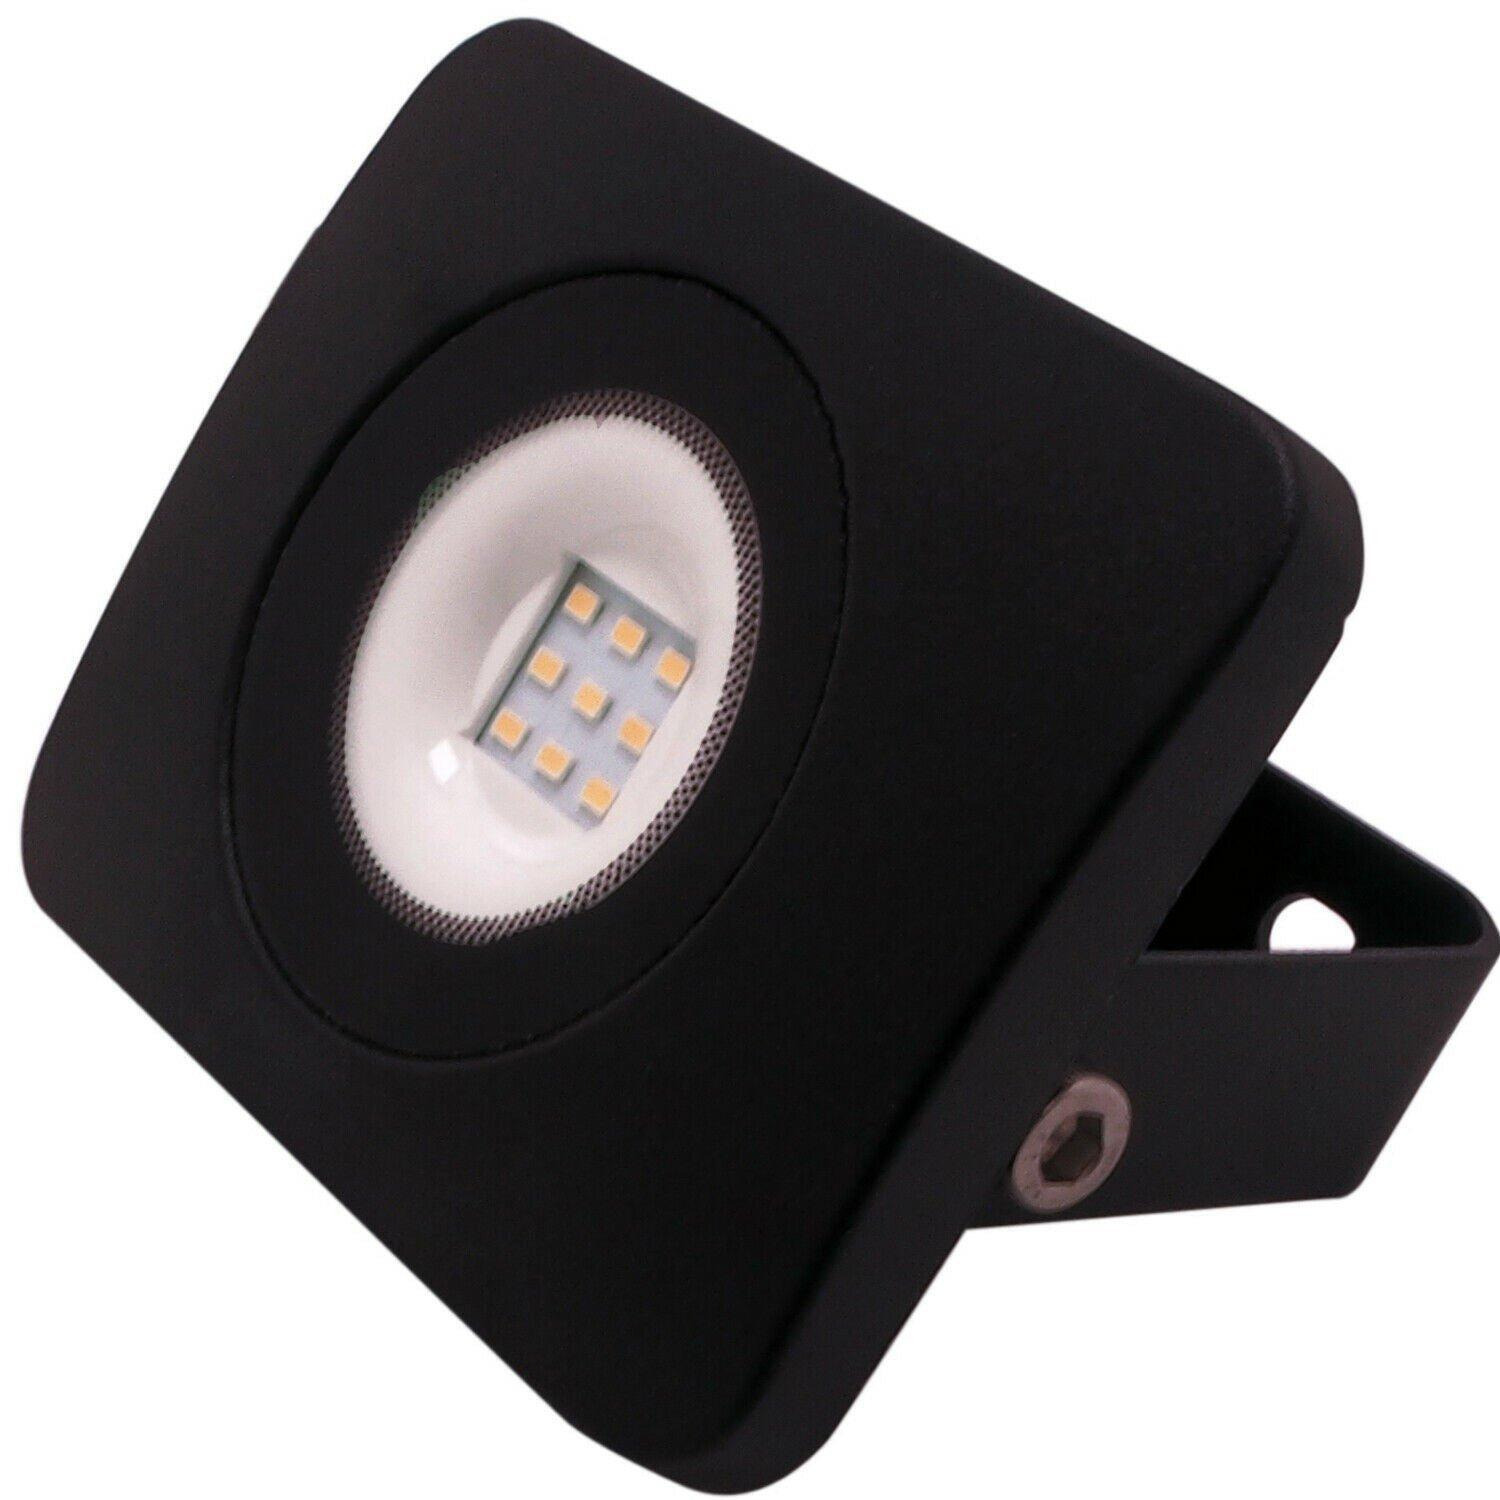 PREMIUM Slim Outdoor 30W LED Floodlight Bright Security IP65 Waterproof Light - image 1